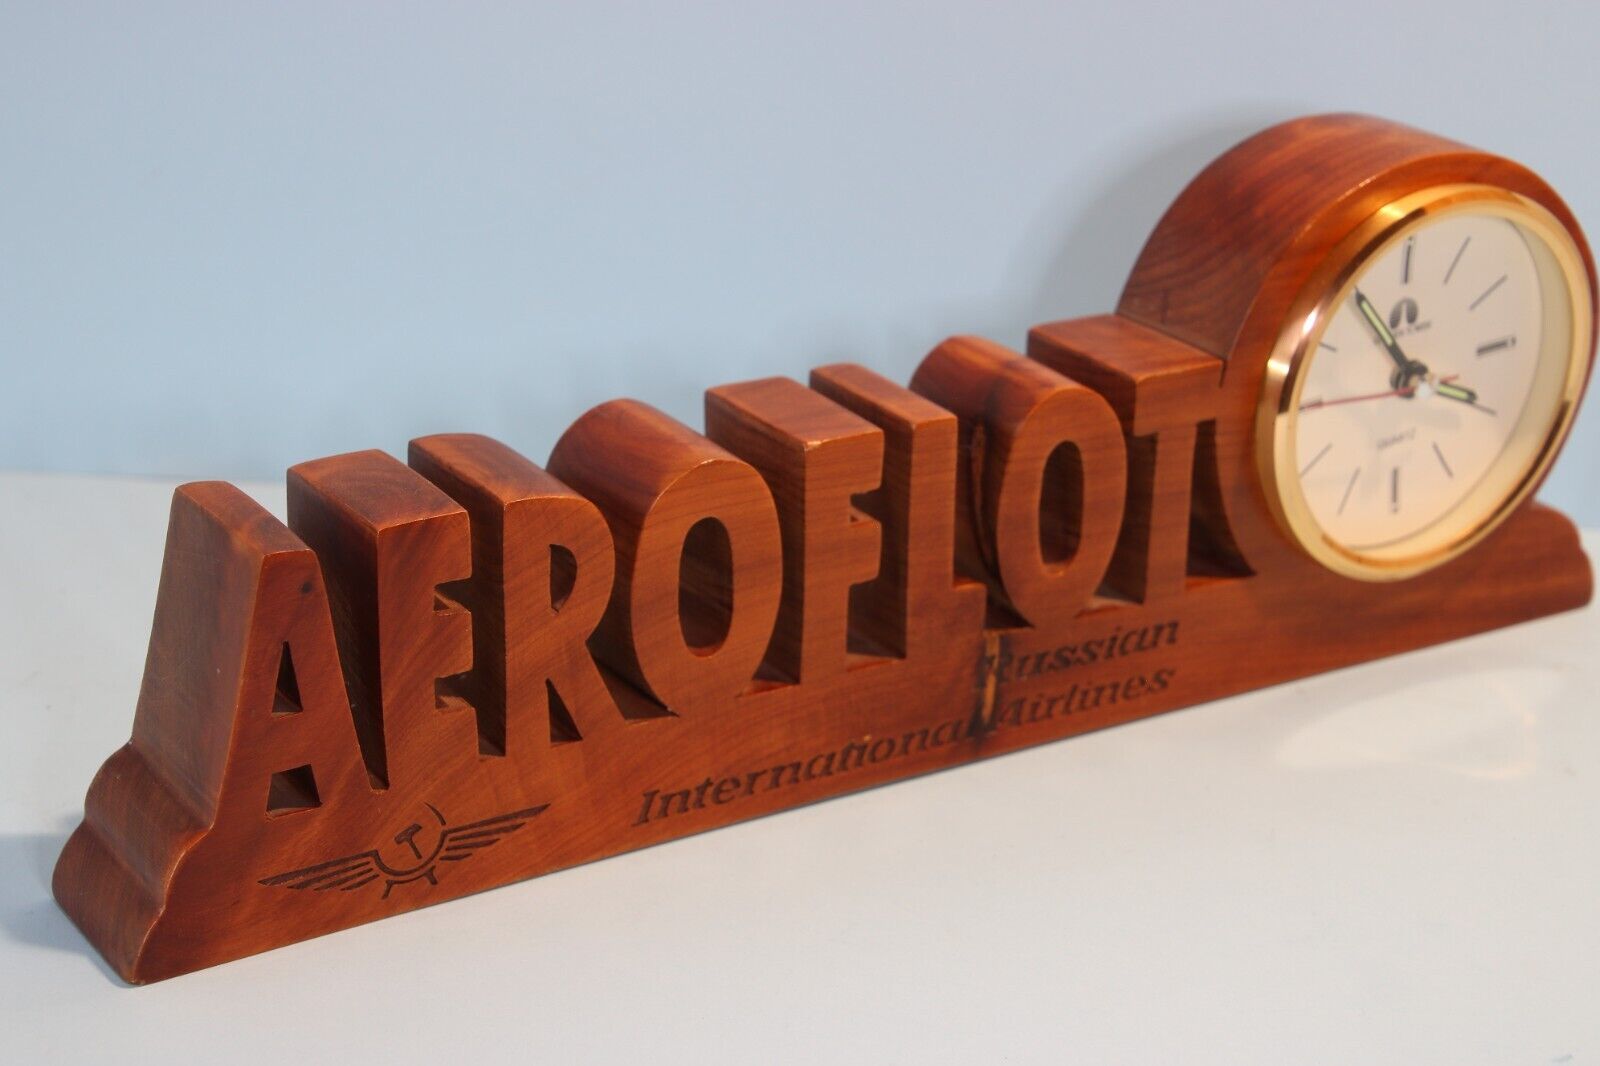 Vintage AEROFLOT Display Stand with working clock